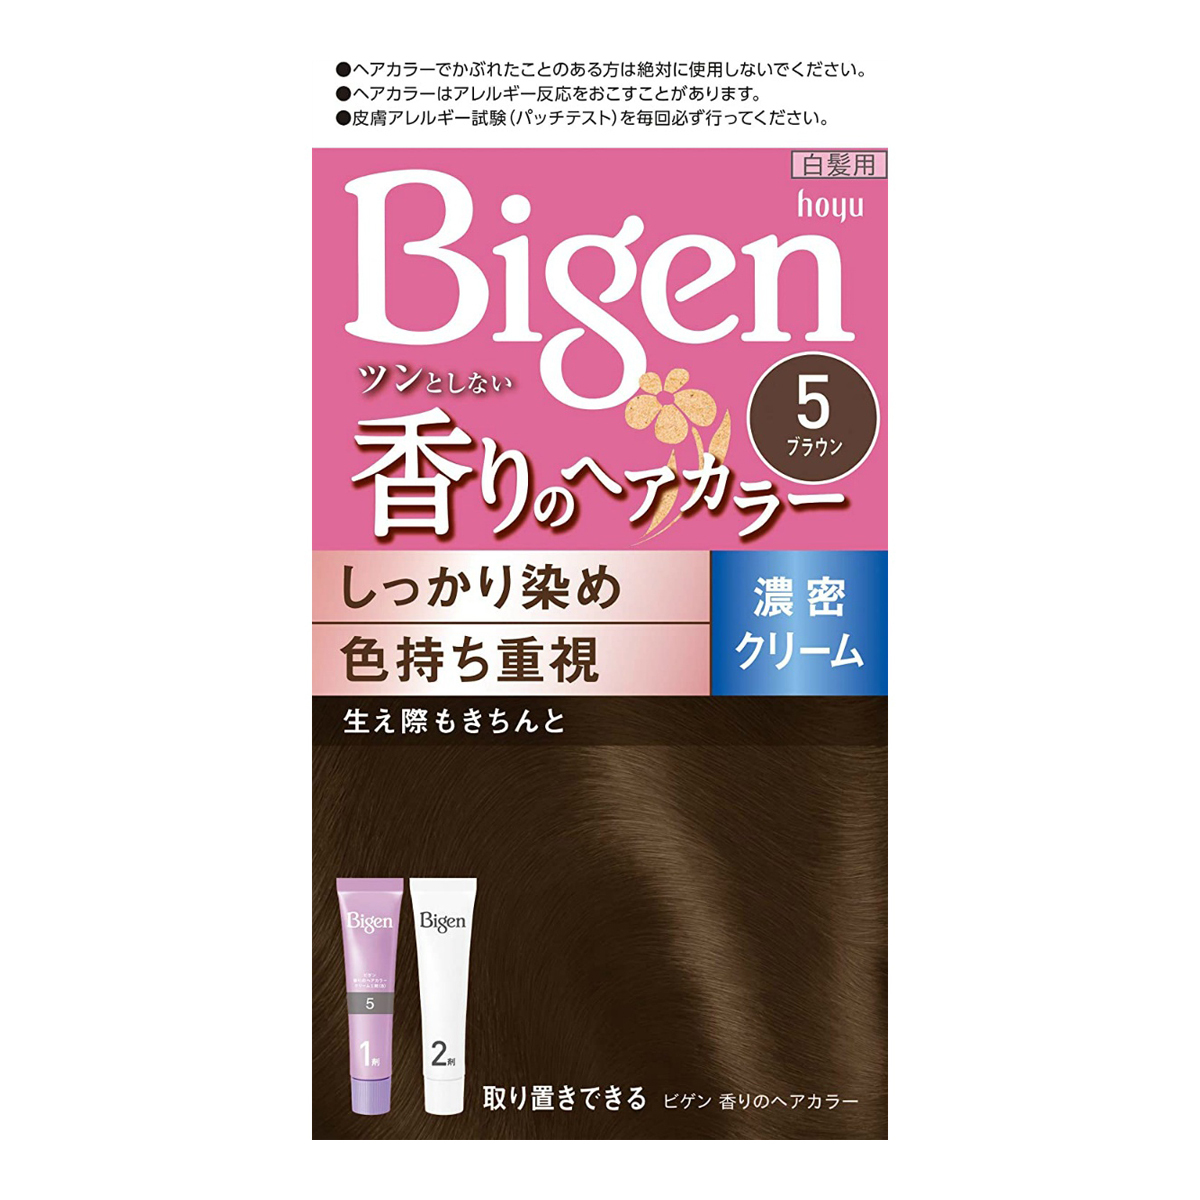 hoyu ビゲン 香りのヘアカラー クリーム 5 ブラウン×1個 ビゲン レディース白髪染めの商品画像